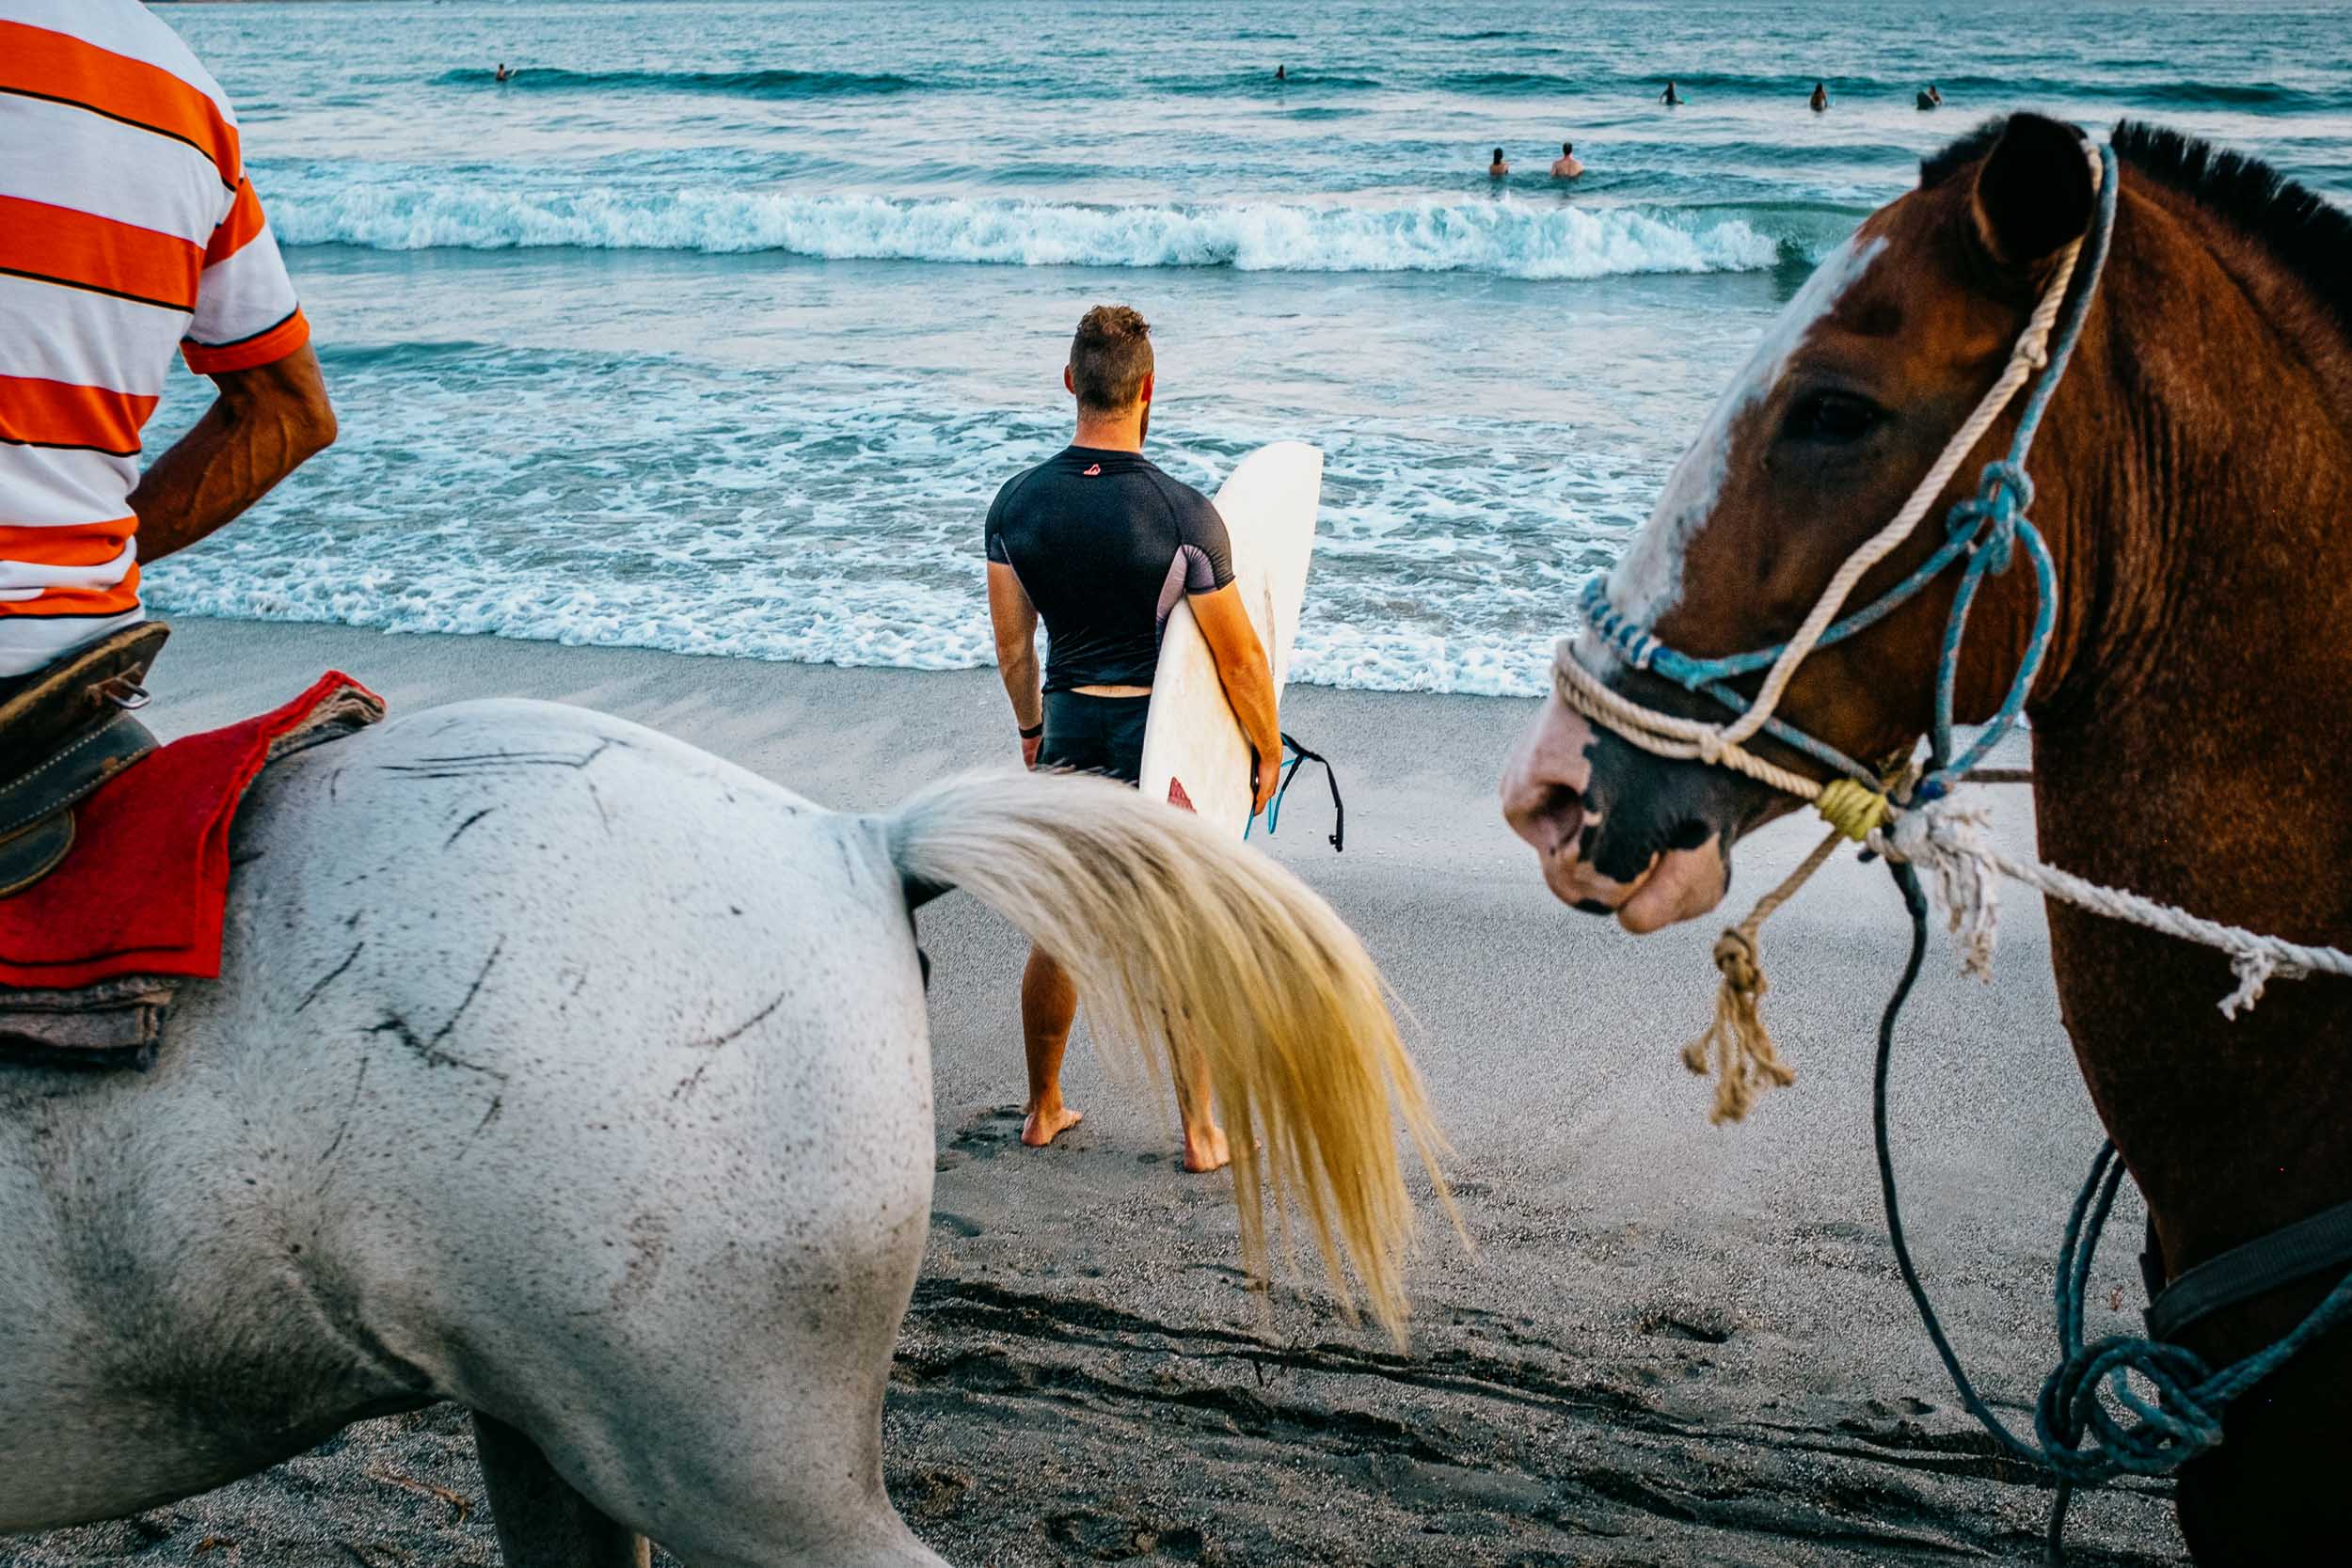 samara costa rica surfer and horses on beach